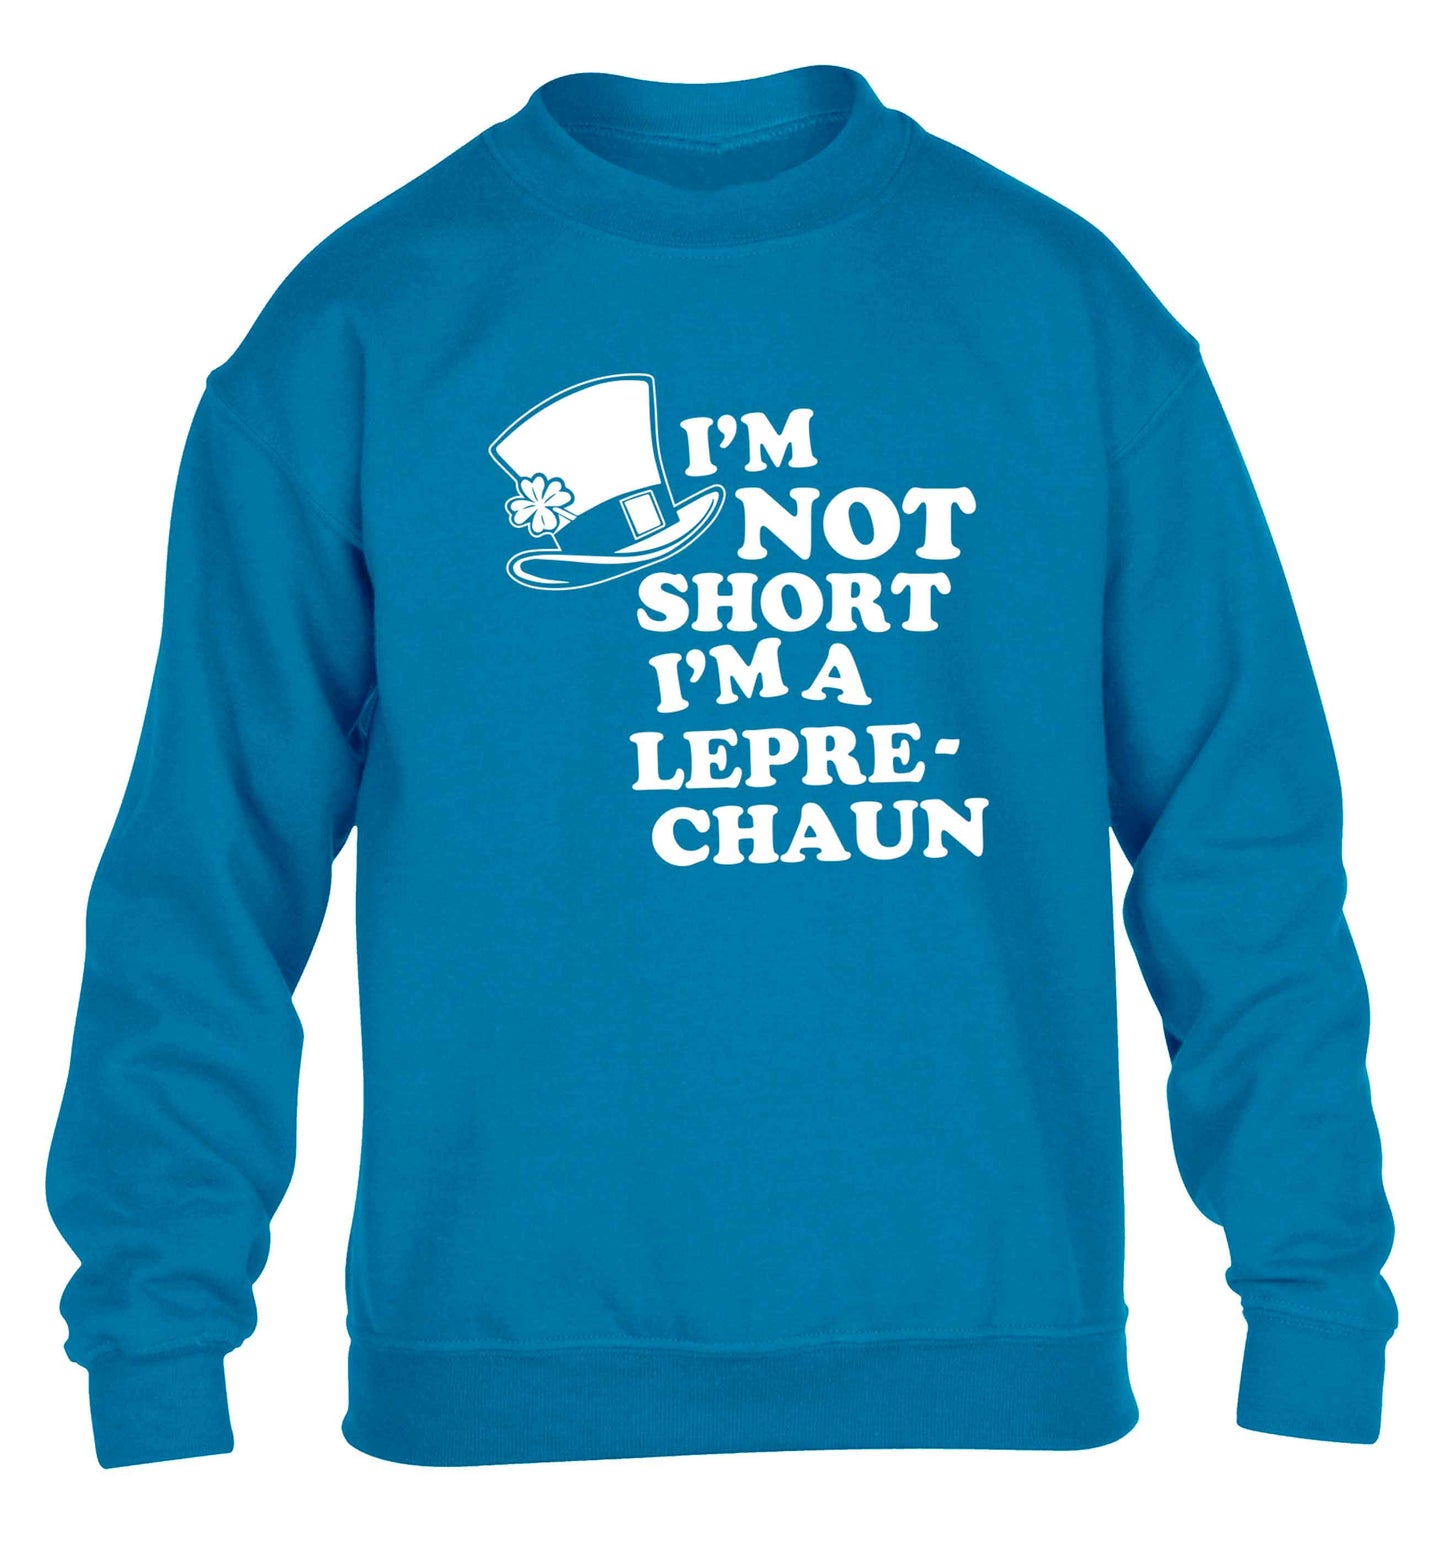 I'm not short I'm a leprechaun children's blue sweater 12-13 Years